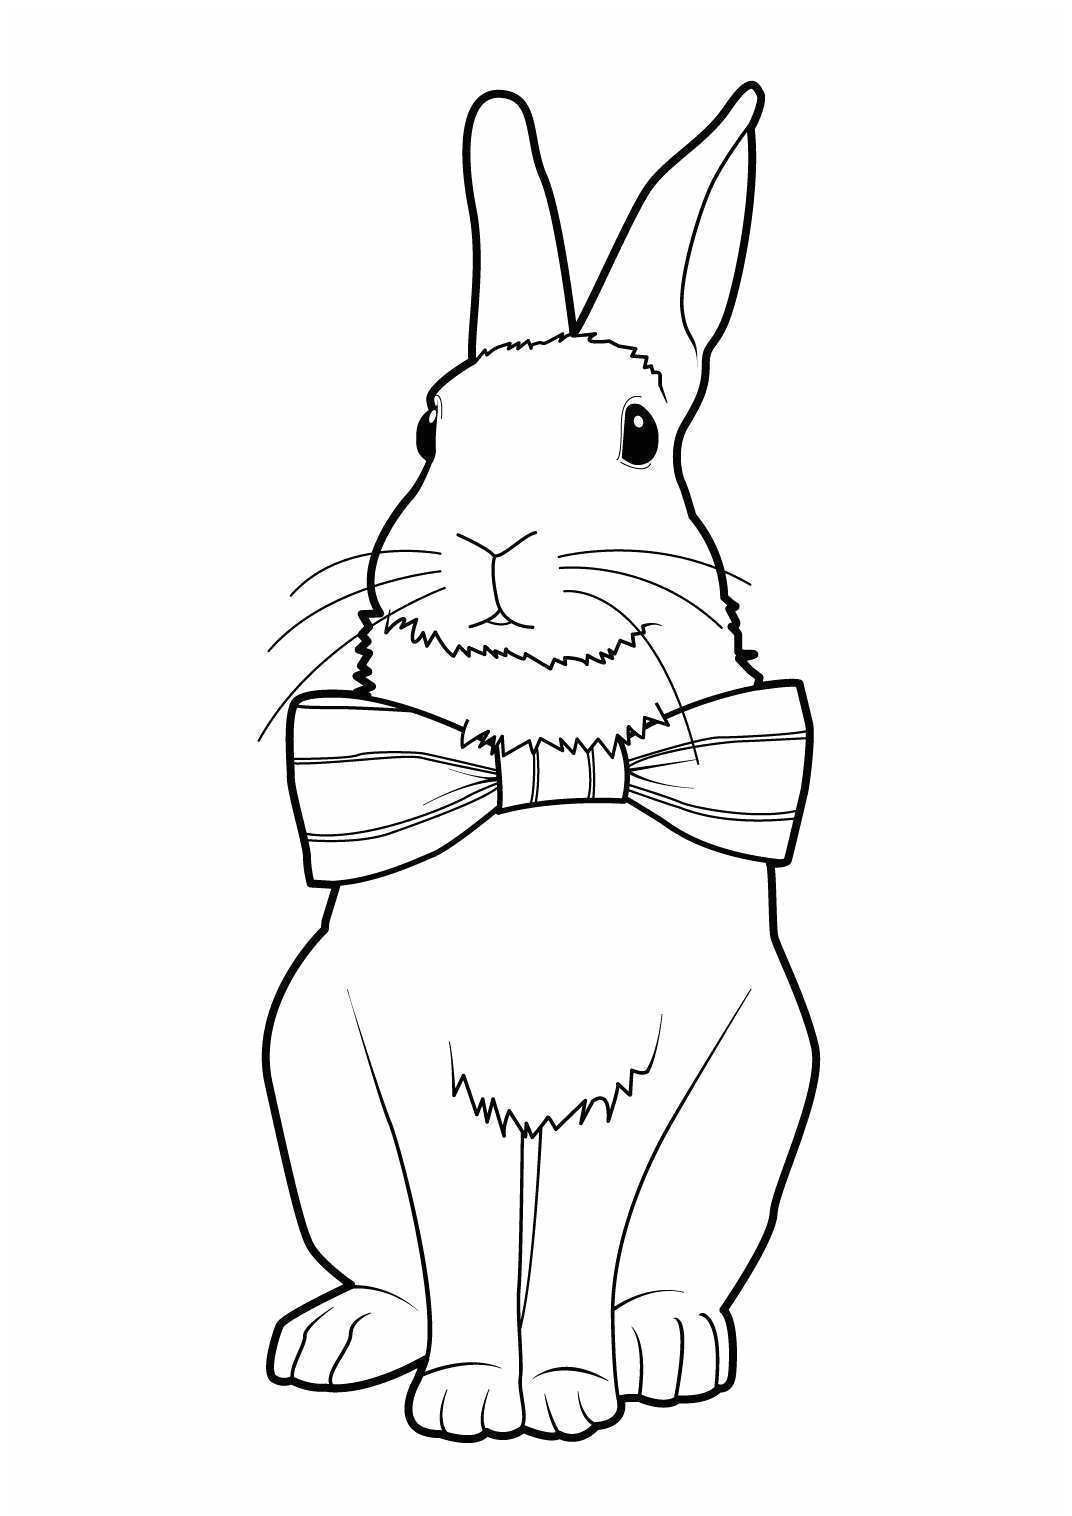 pixel art lapin mignon favori coloriage de lapin fresh dessin lapin facile beau dessin lapin